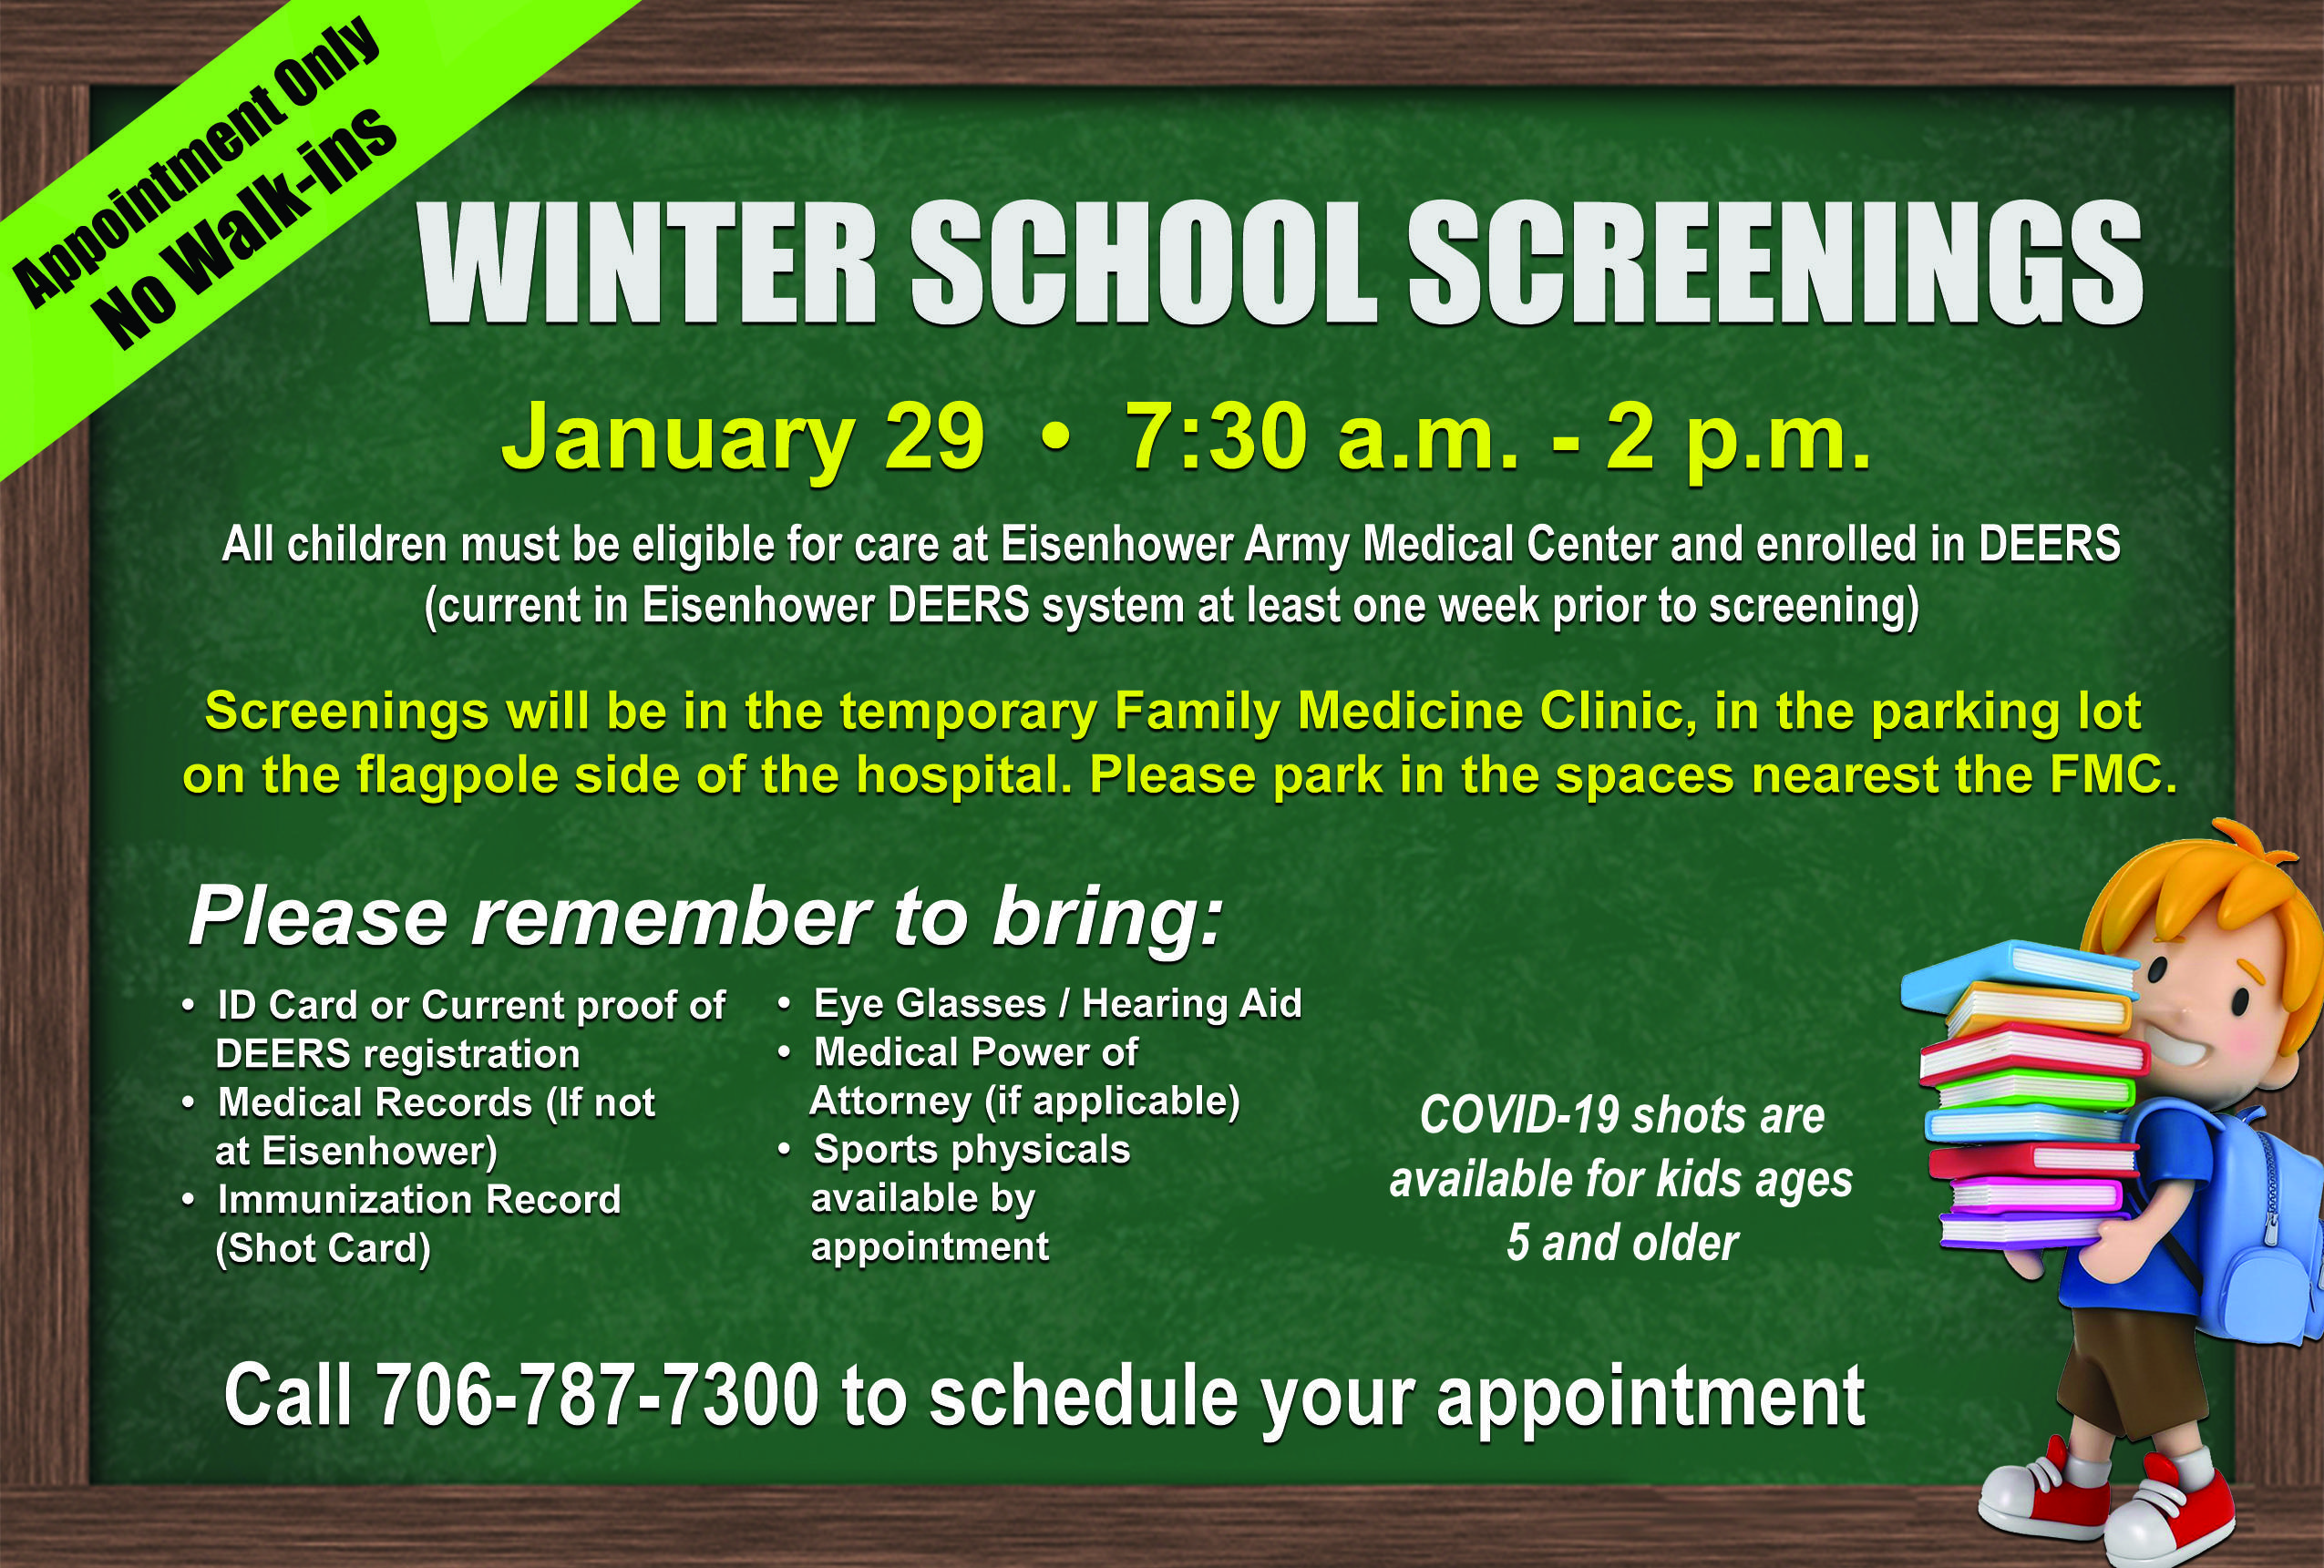 Winter school screenings available